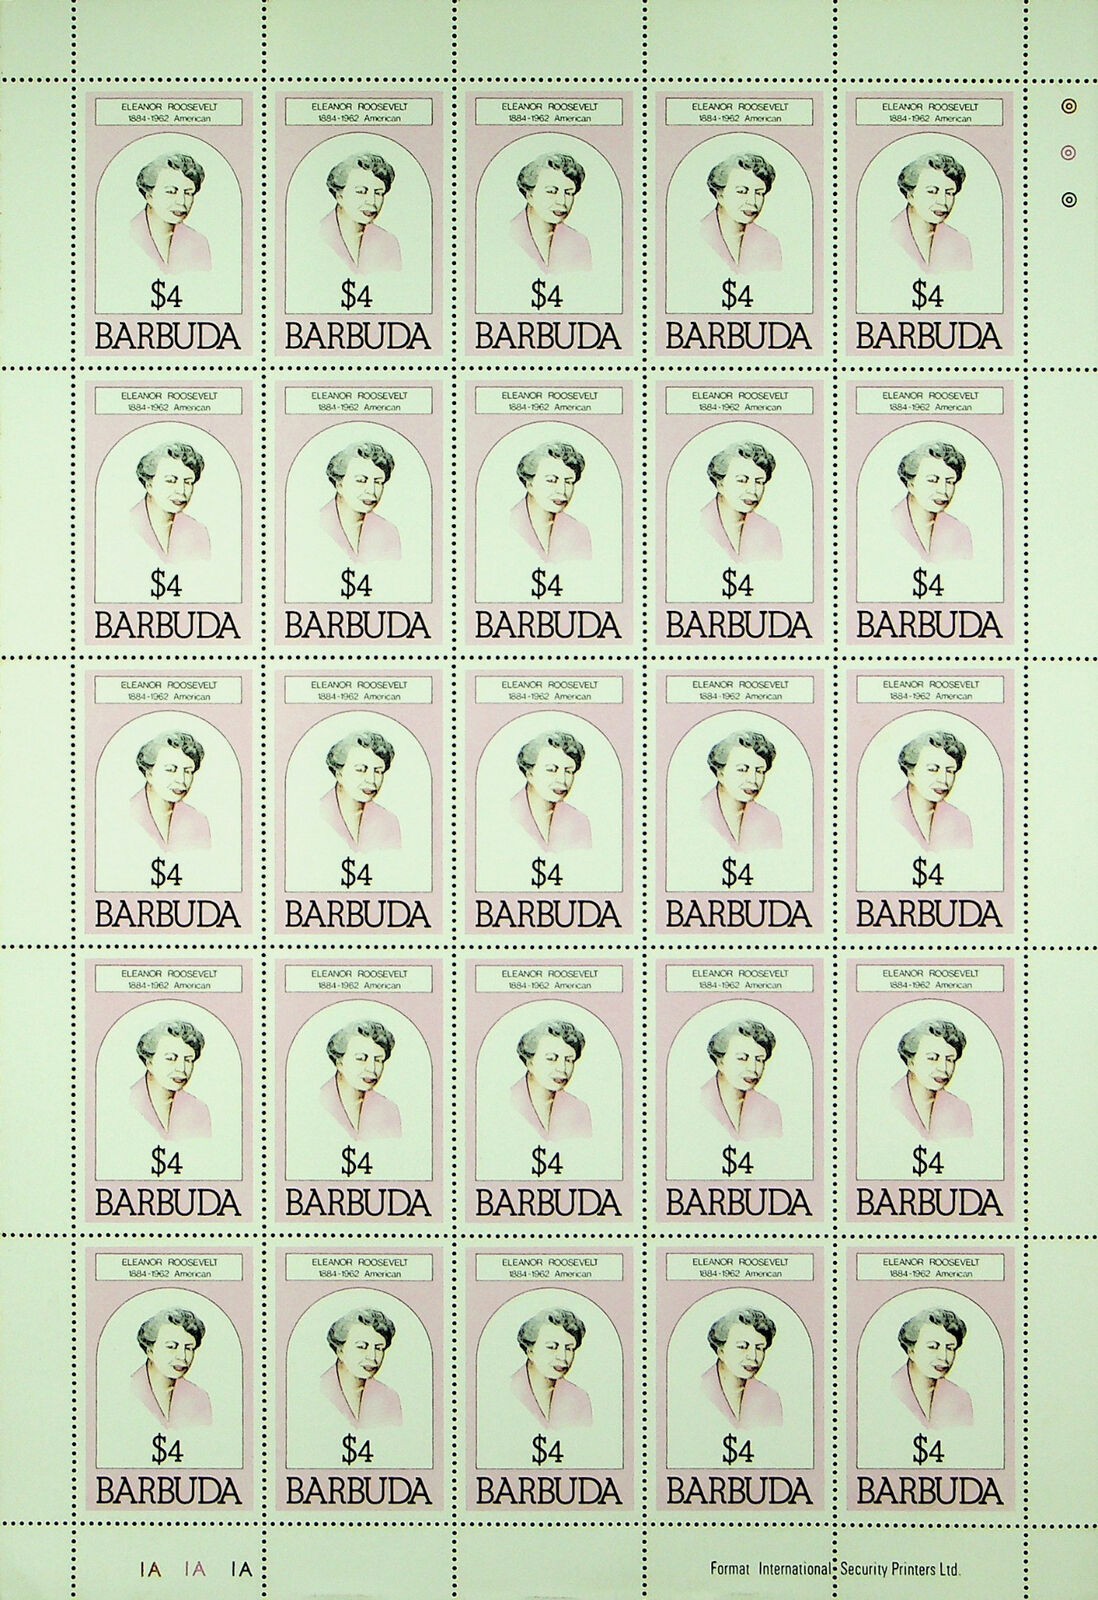 BARBUDA AMERICAN ELEANOR ROOSEVELT $4 x 20v FINE MNH SHEET